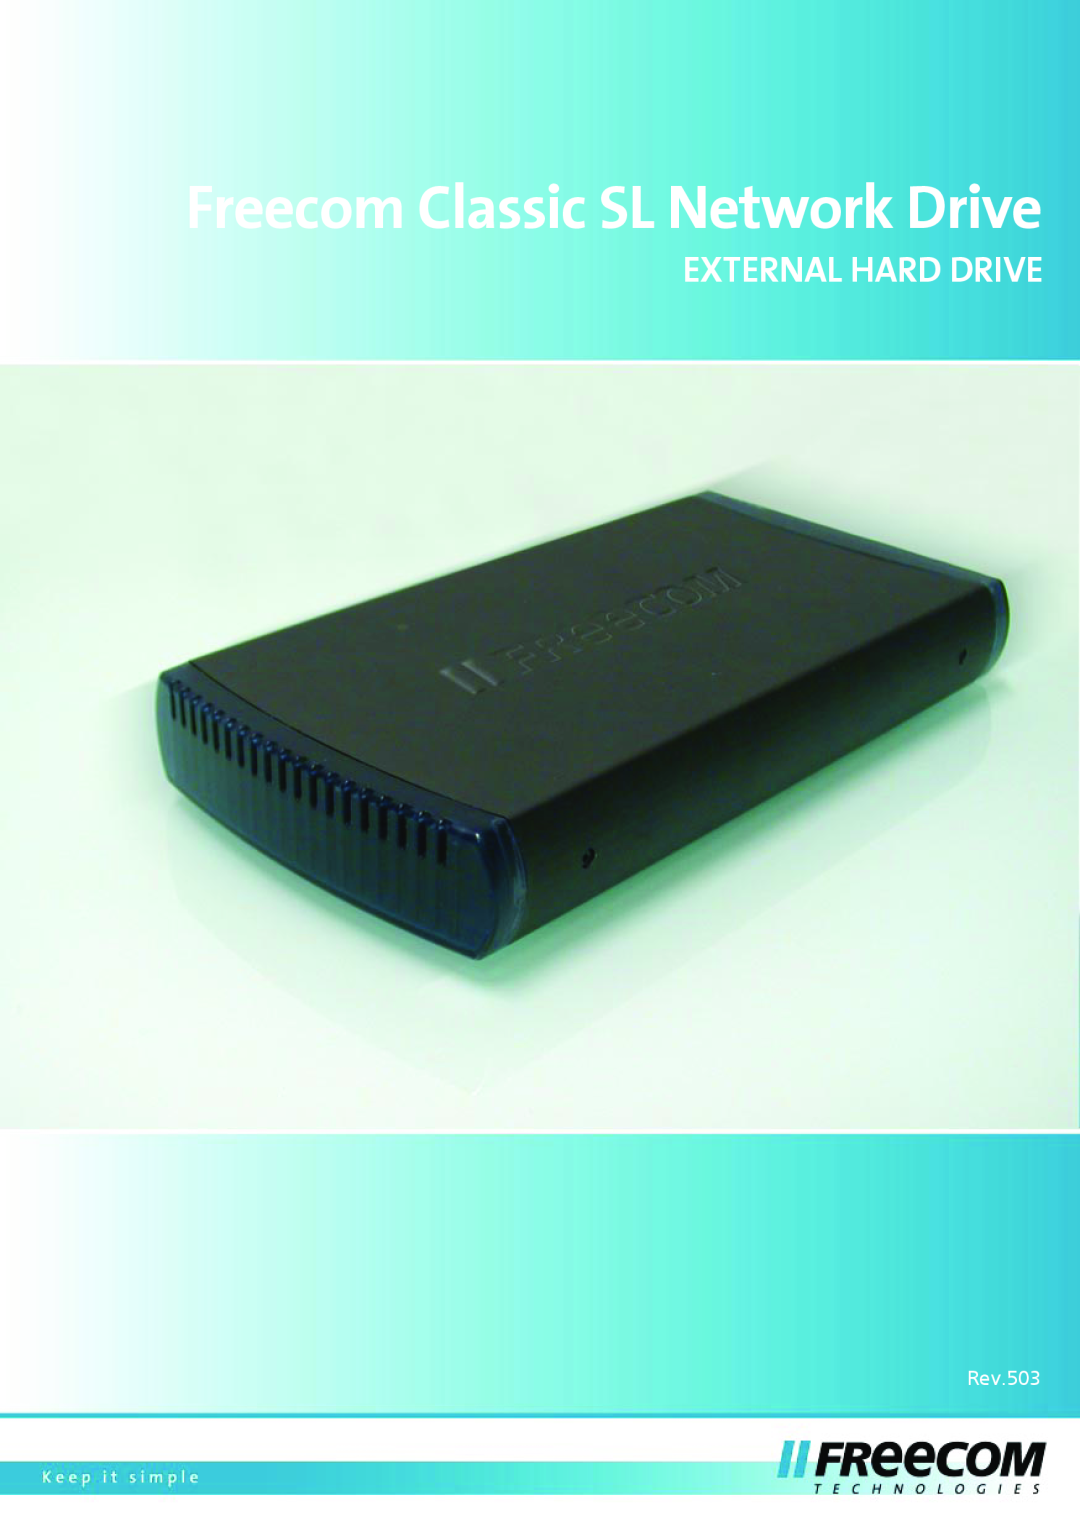 Freecom Technologies Network hard drive manual Freecom Classic SL Network Drive, External Hard Drive, Rev.503 